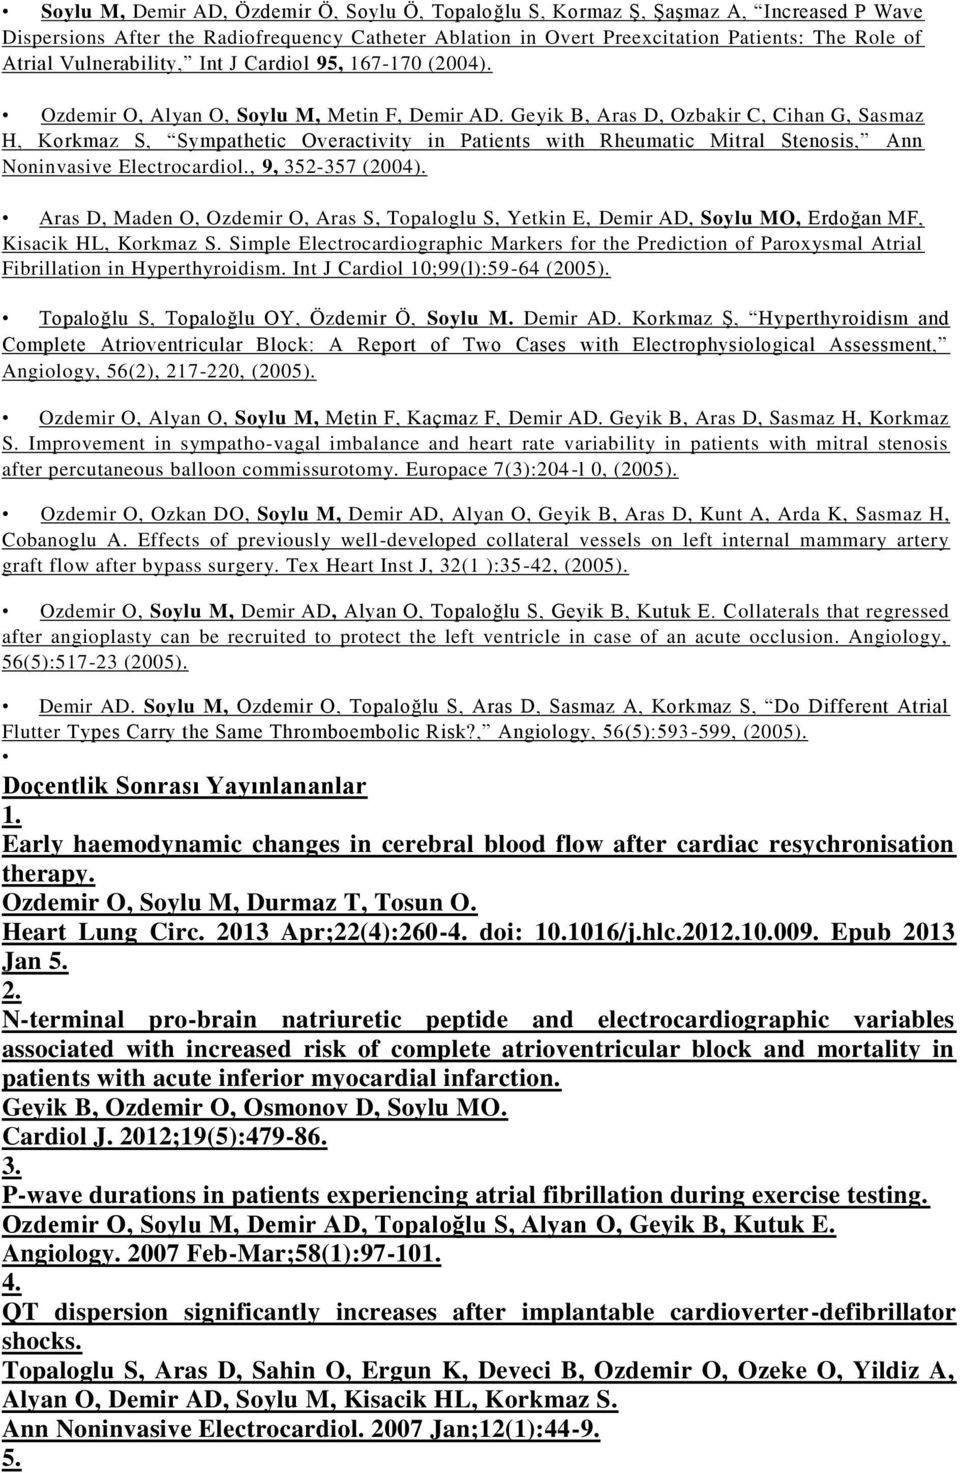 Geyik B, Aras D, Ozbakir C, Cihan G, Sasmaz H, Korkmaz S, Sympathetic Overactivity in Patients with Rheumatic Mitral Stenosis, Ann Noninvasive Electrocardiol., 9, 352-357 (2004).